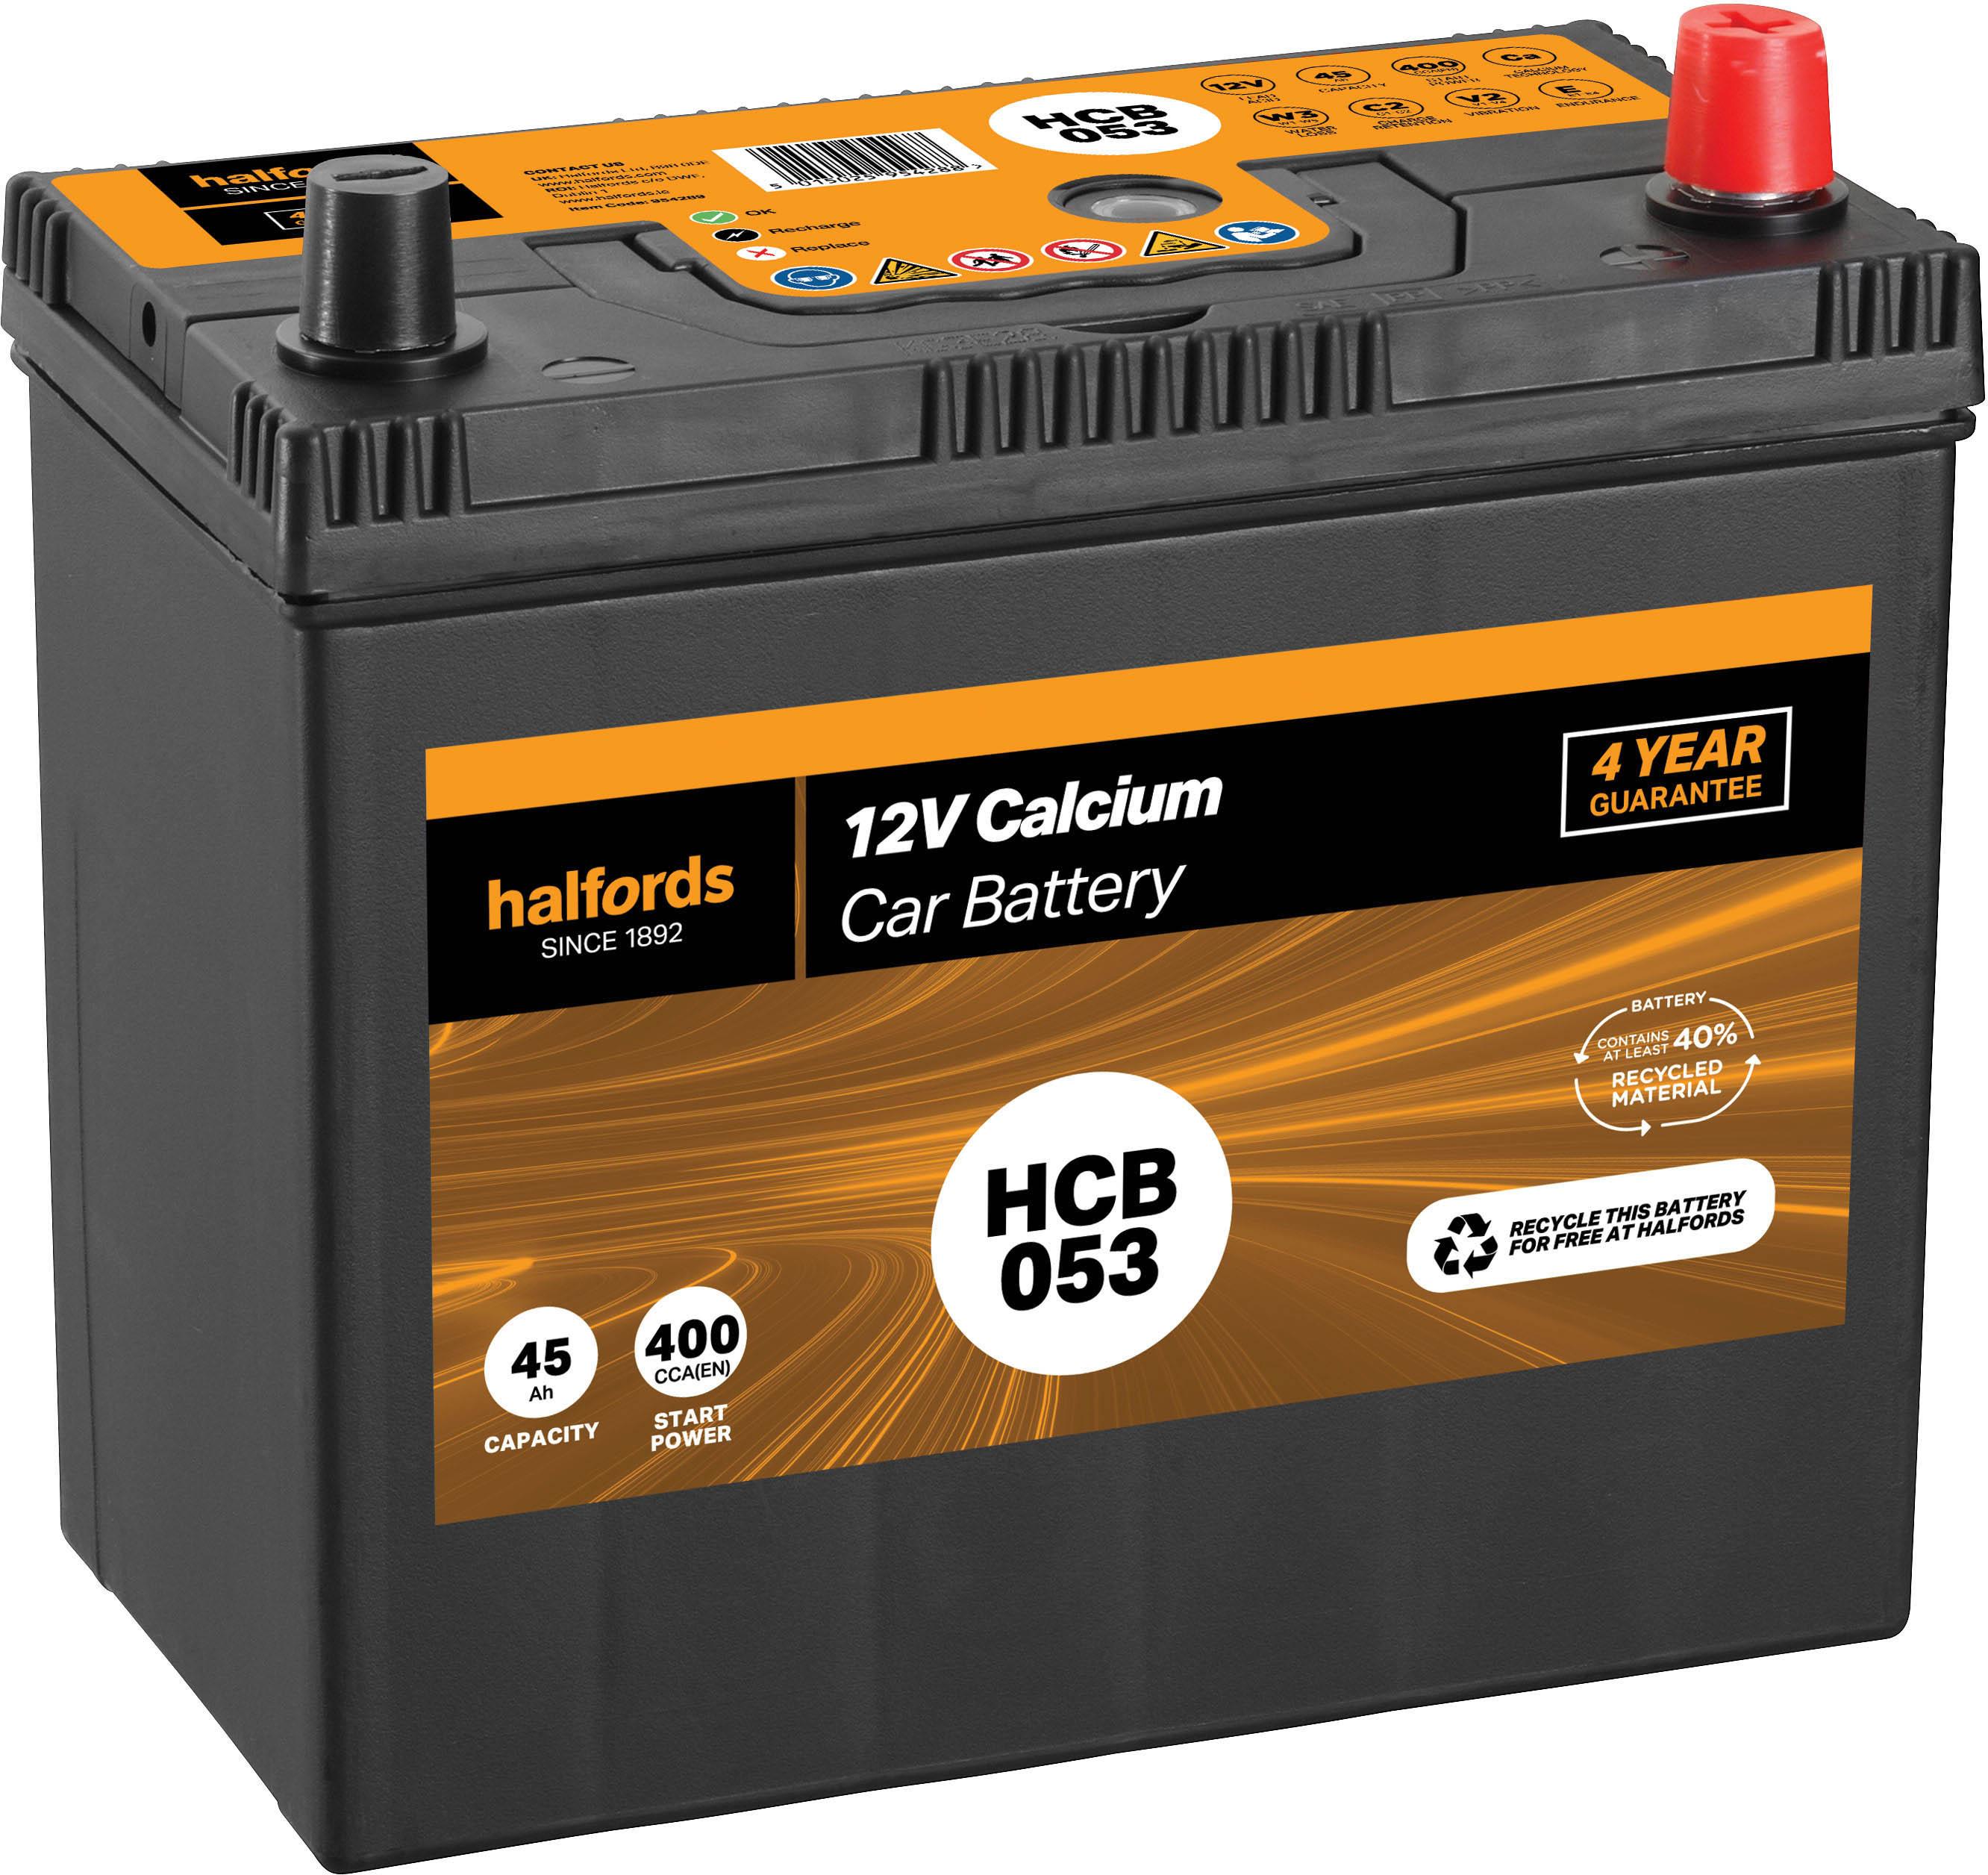 Halfords Hb053 Lead Acid 12V Car Battery 3 Year Guarantee